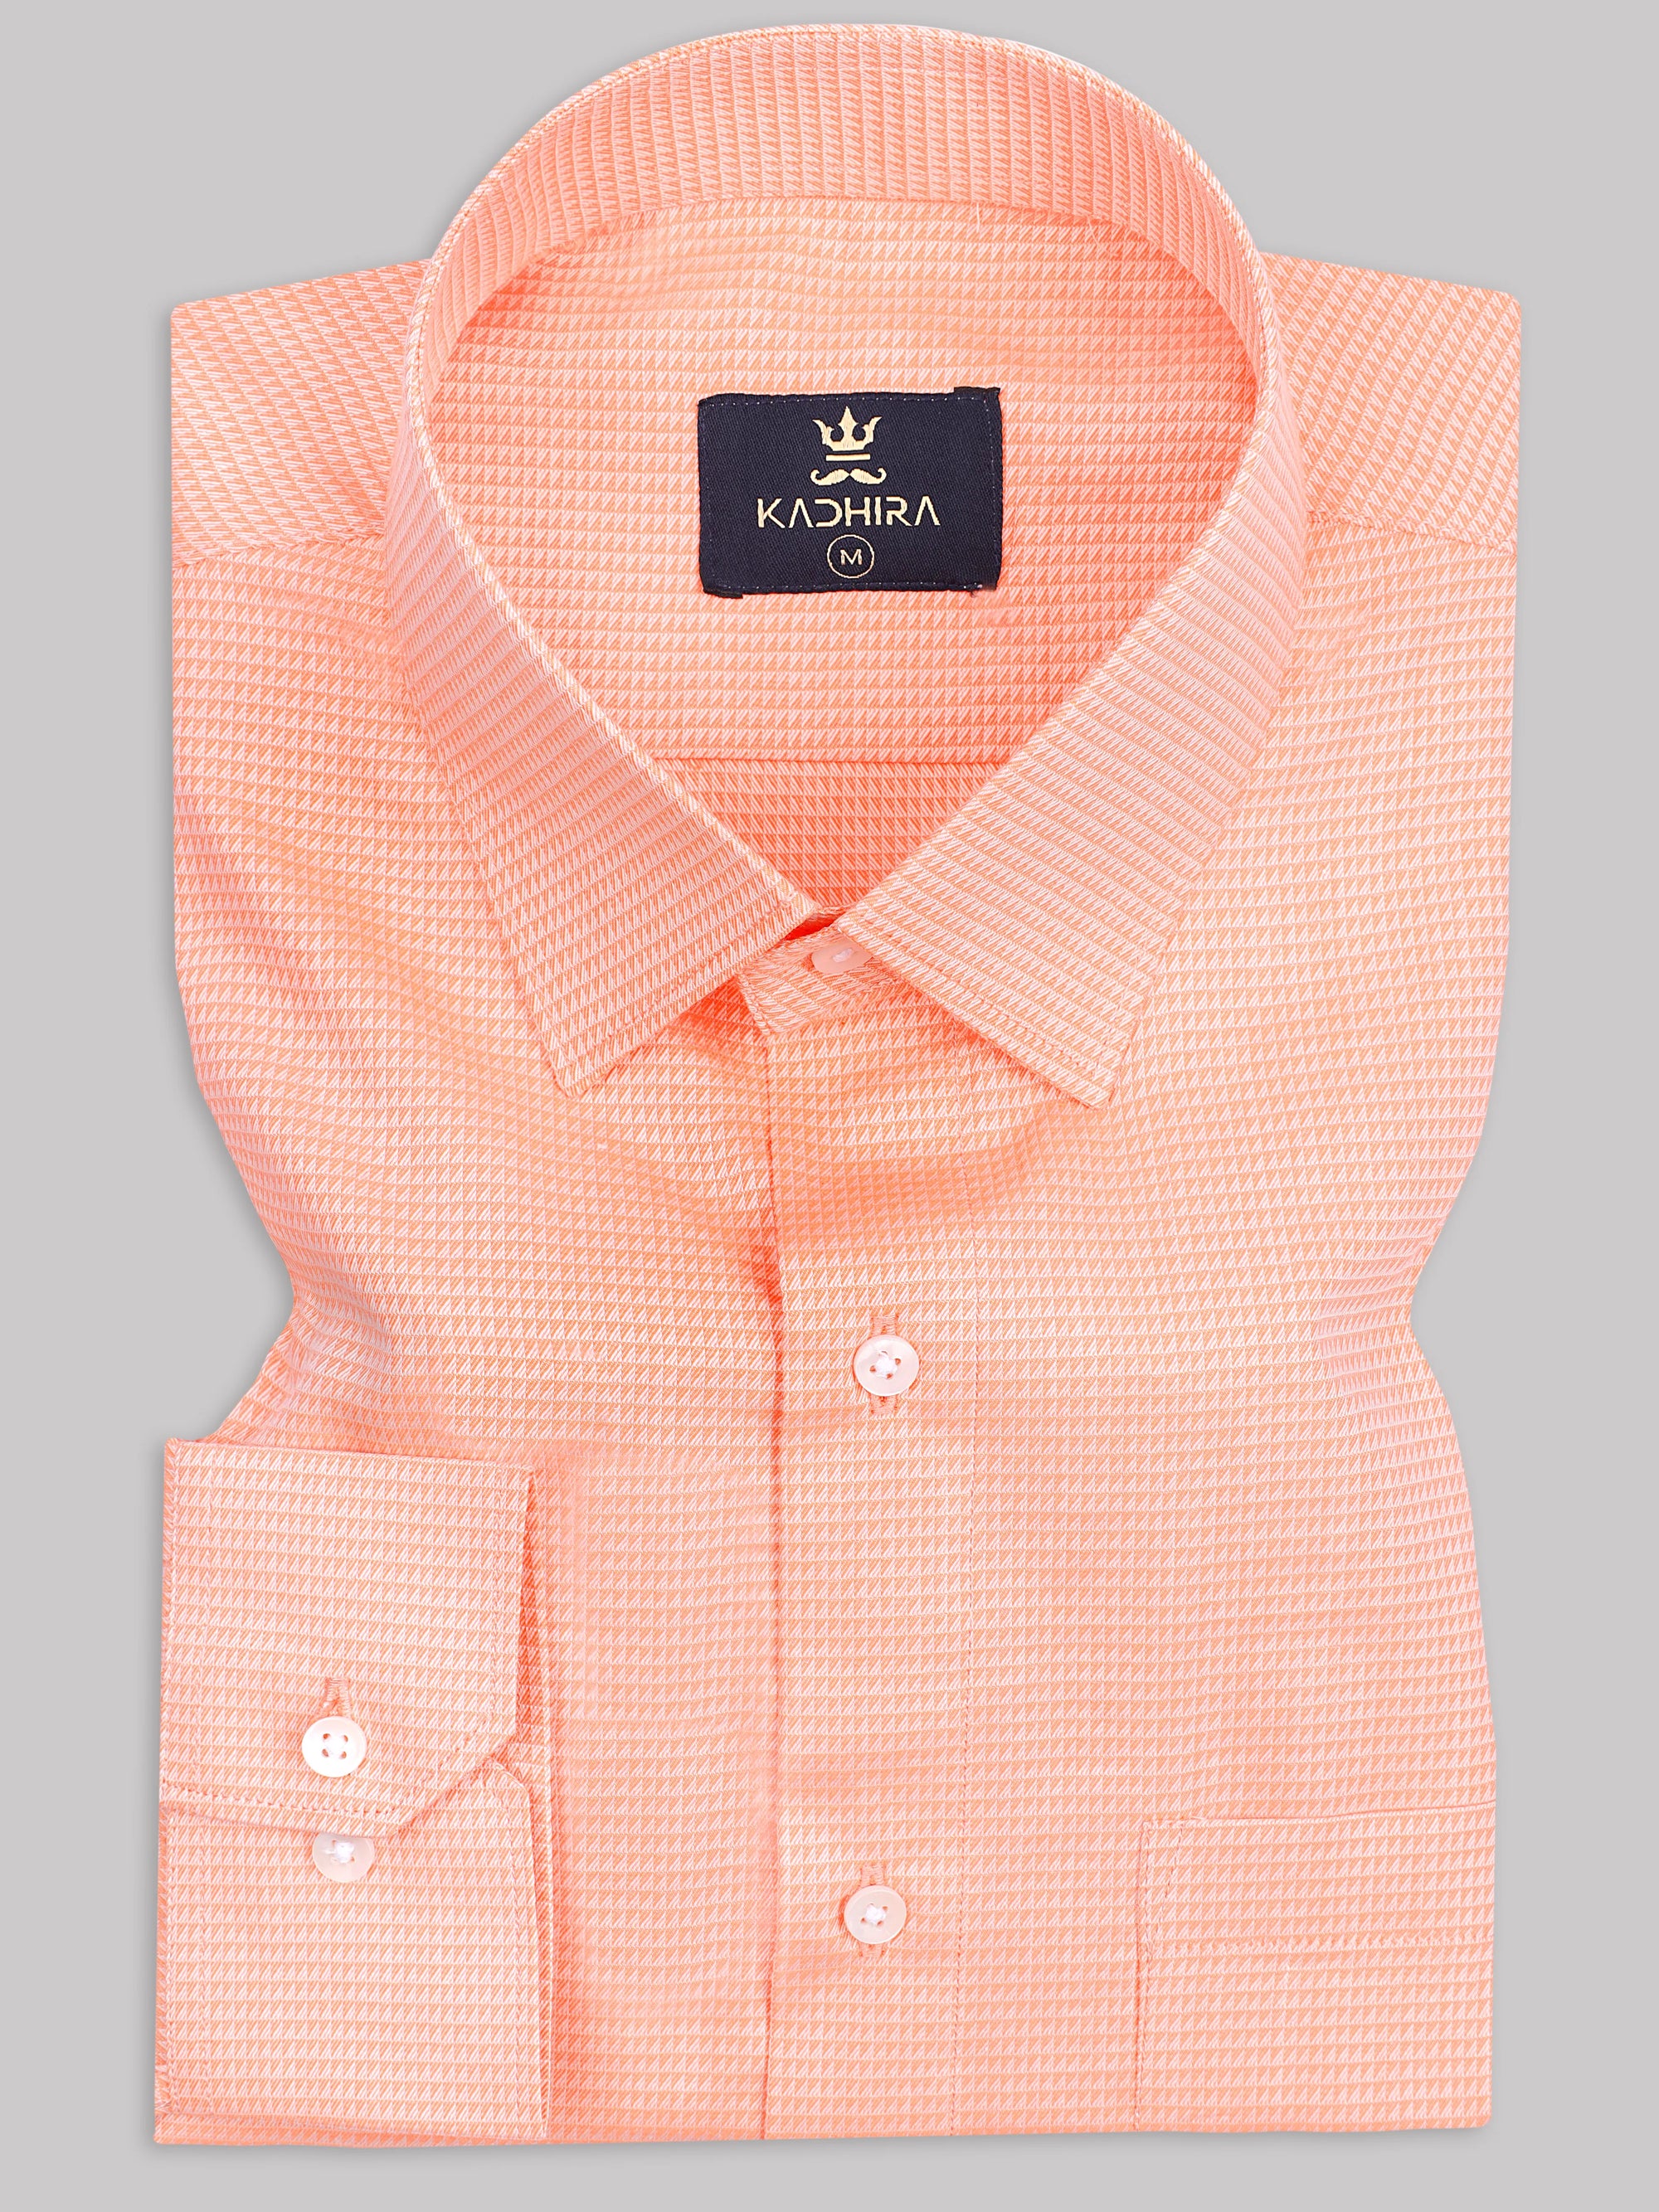 Apricot Orange Dobby Textured Jacquard Cotton Shirt